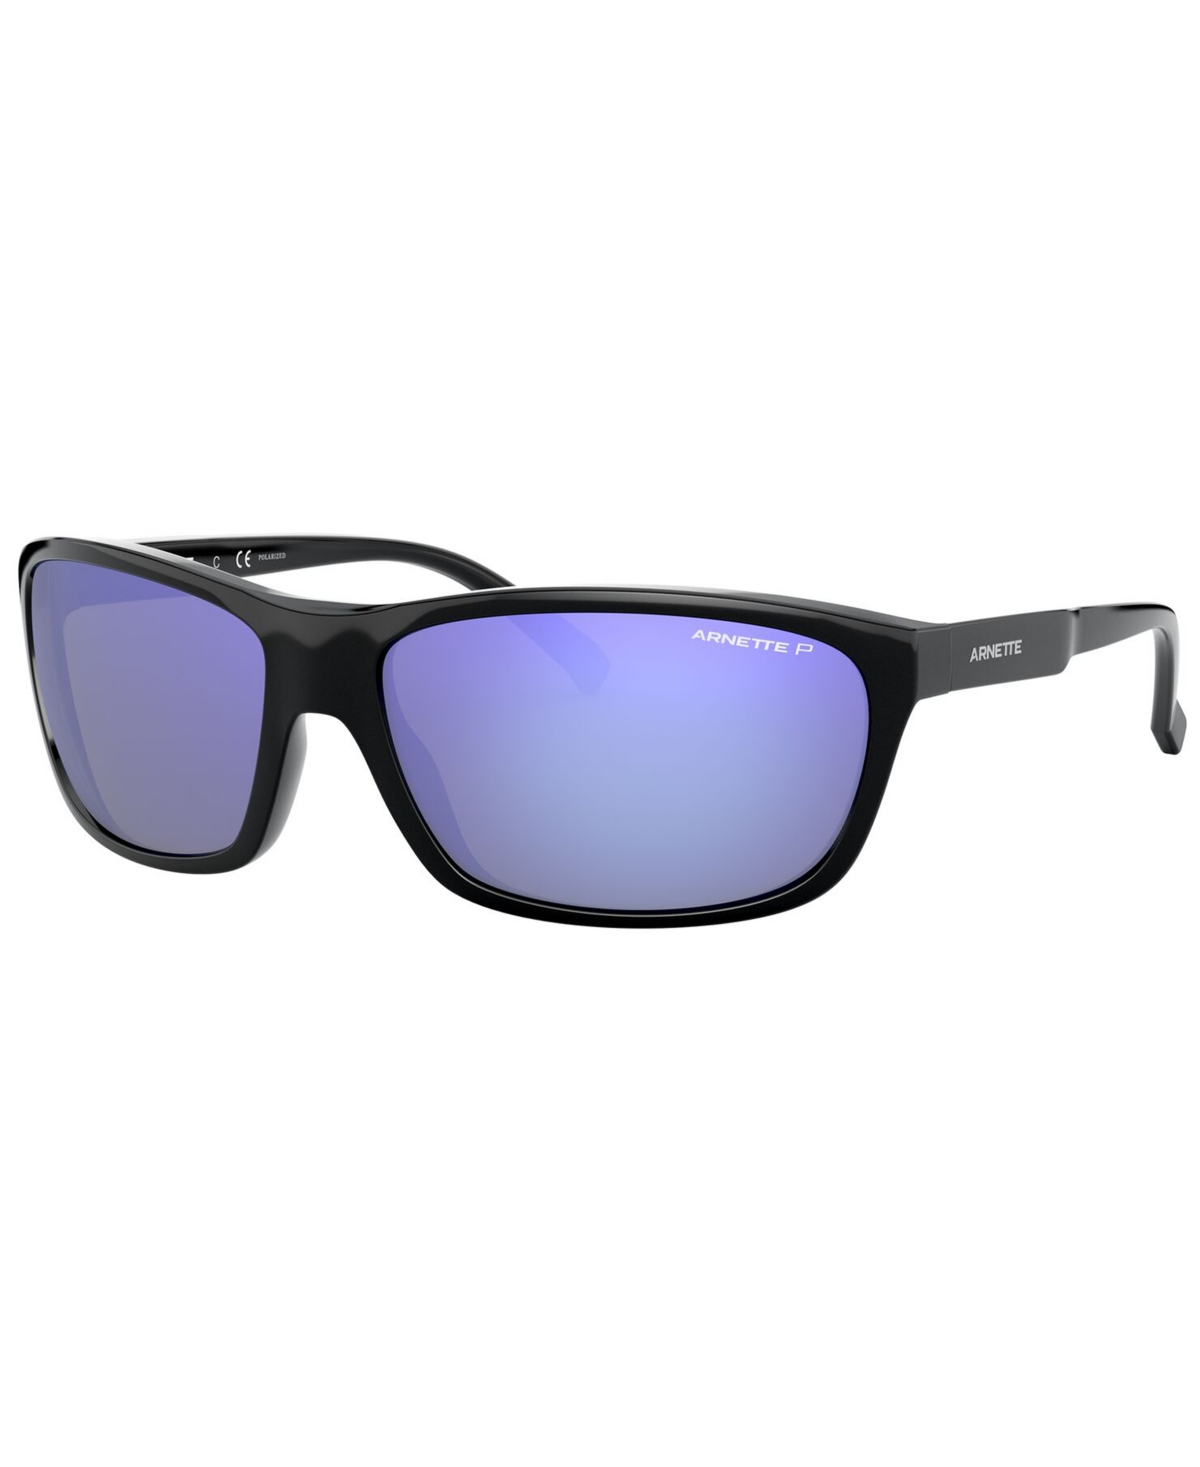 Men's Polarized Sunglasses - BLACK/POLAR DARK GREY MIRROR WATER